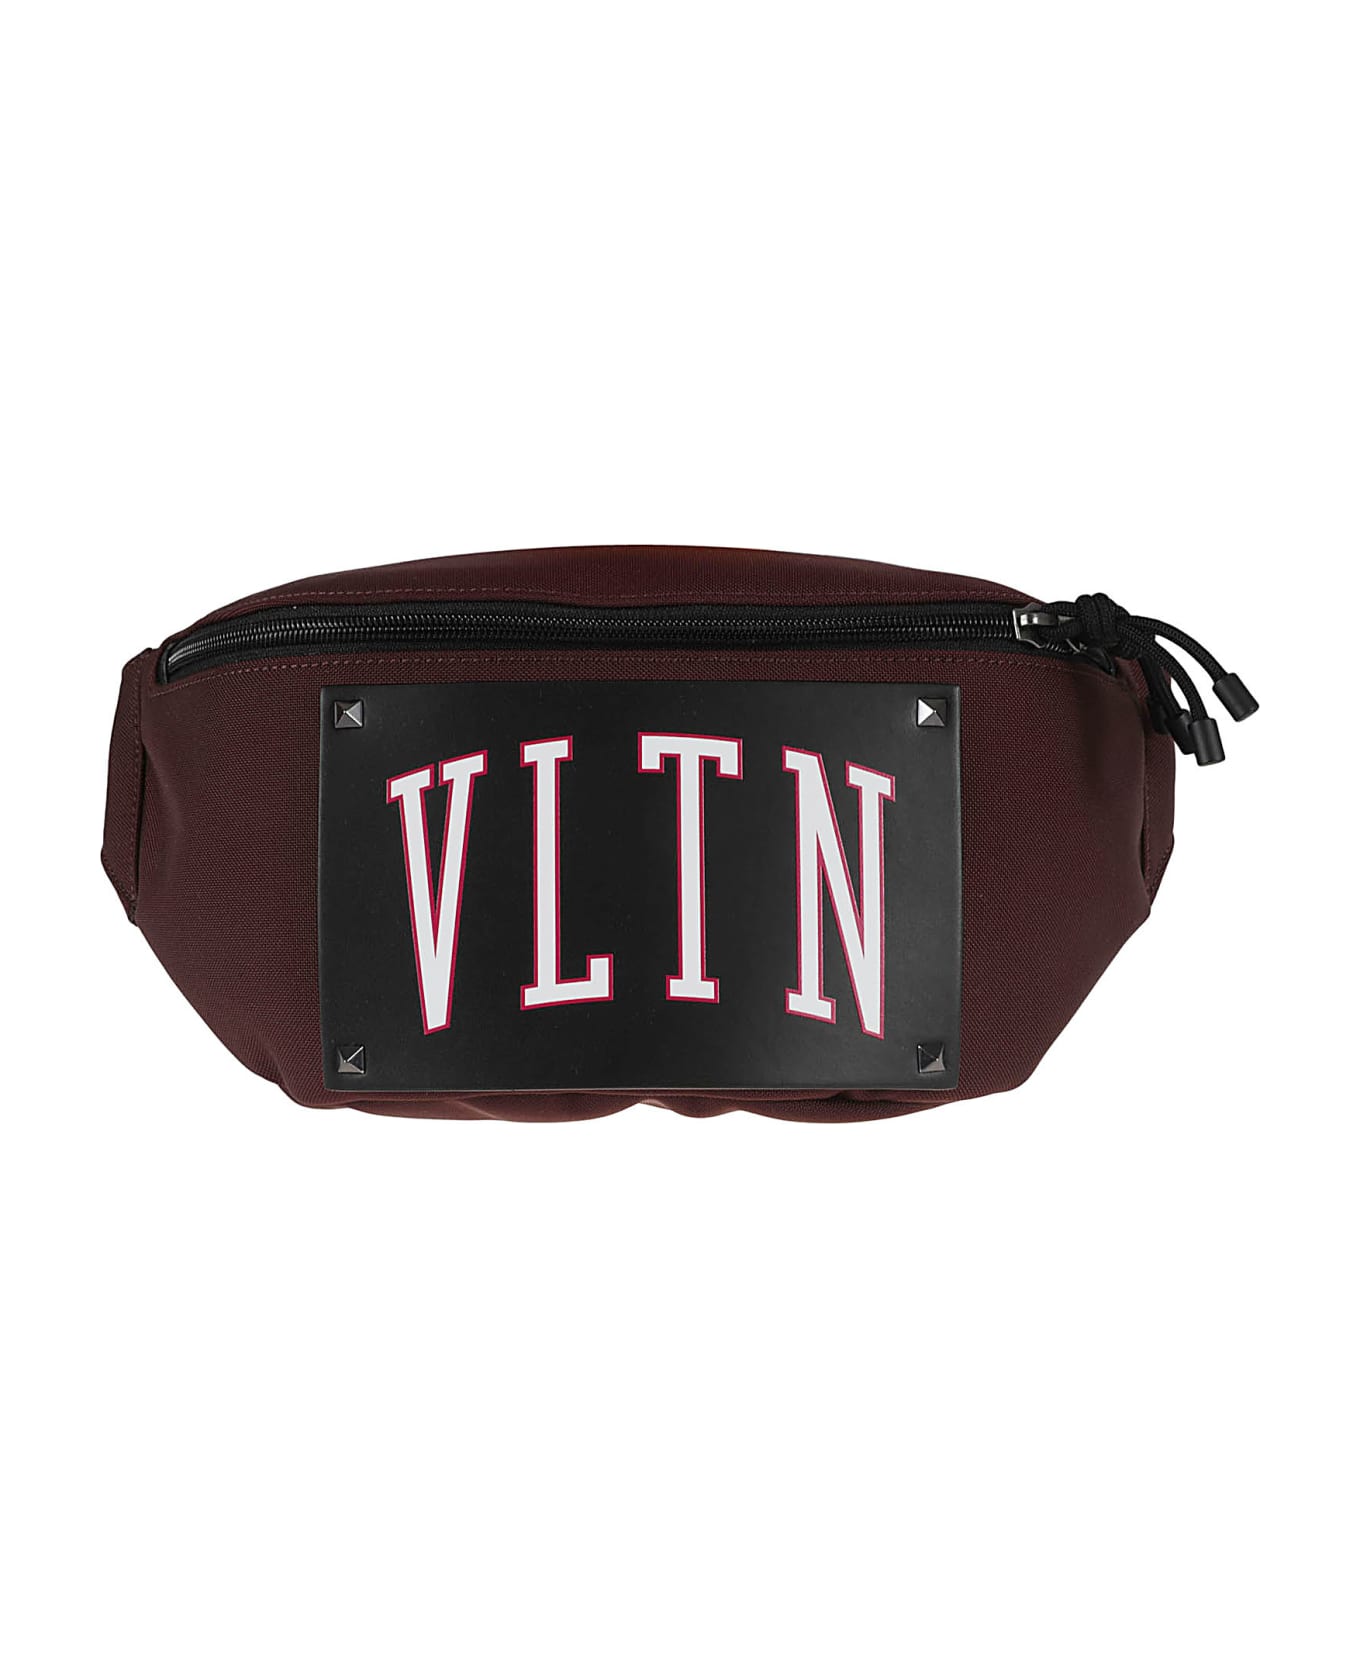 Valentino Garavani Logo Front Belt Bag - Bordeaux/Black